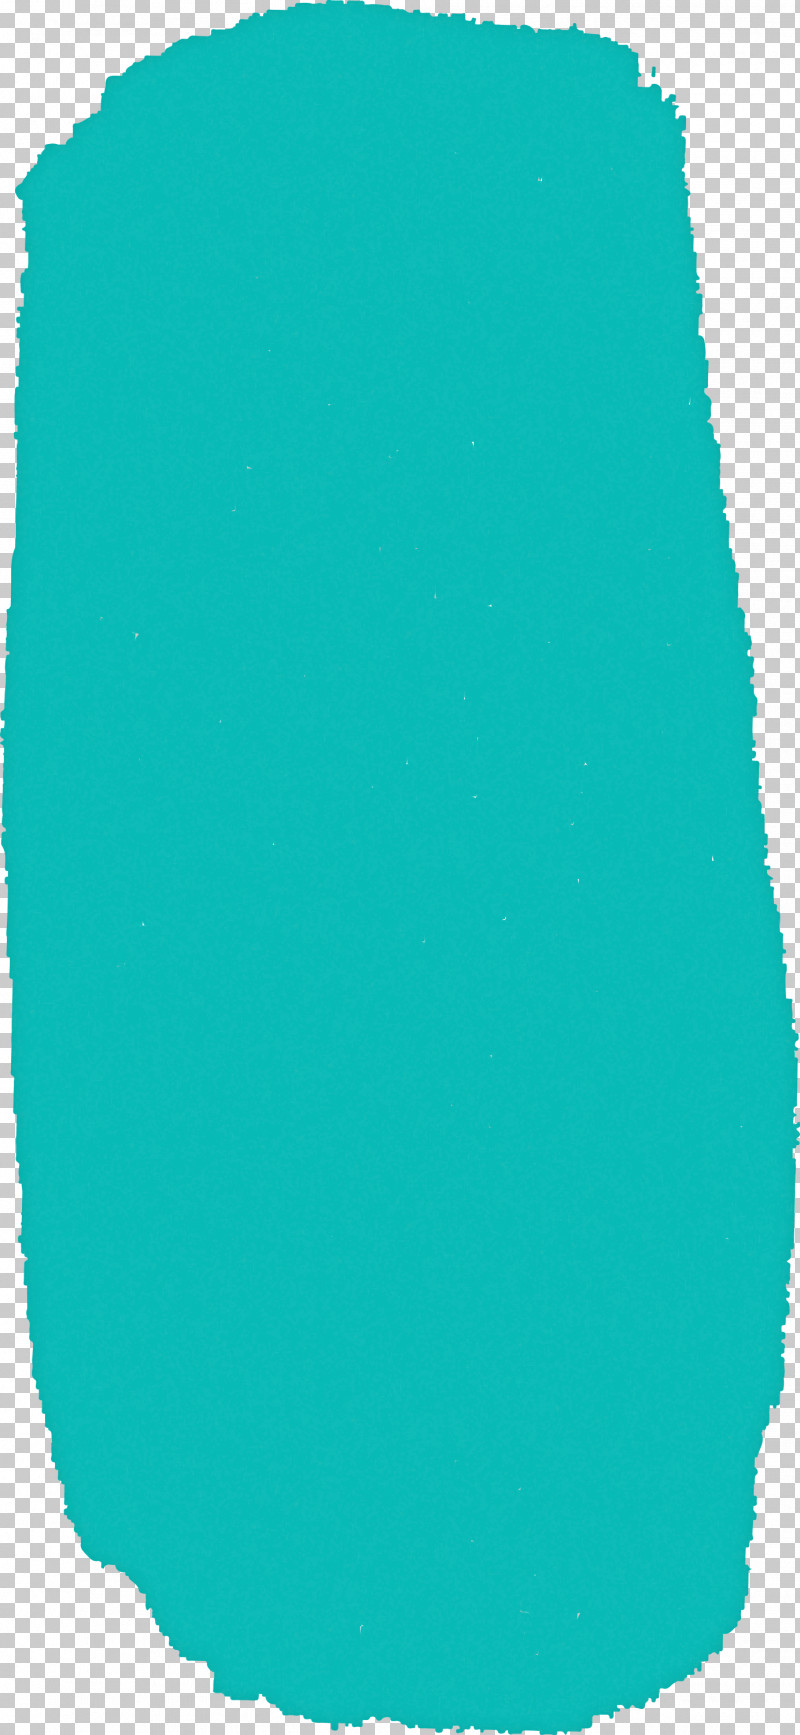 Green Aqua Turquoise Blue Teal PNG, Clipart, Aqua, Blue, Green, Teal, Turquoise Free PNG Download